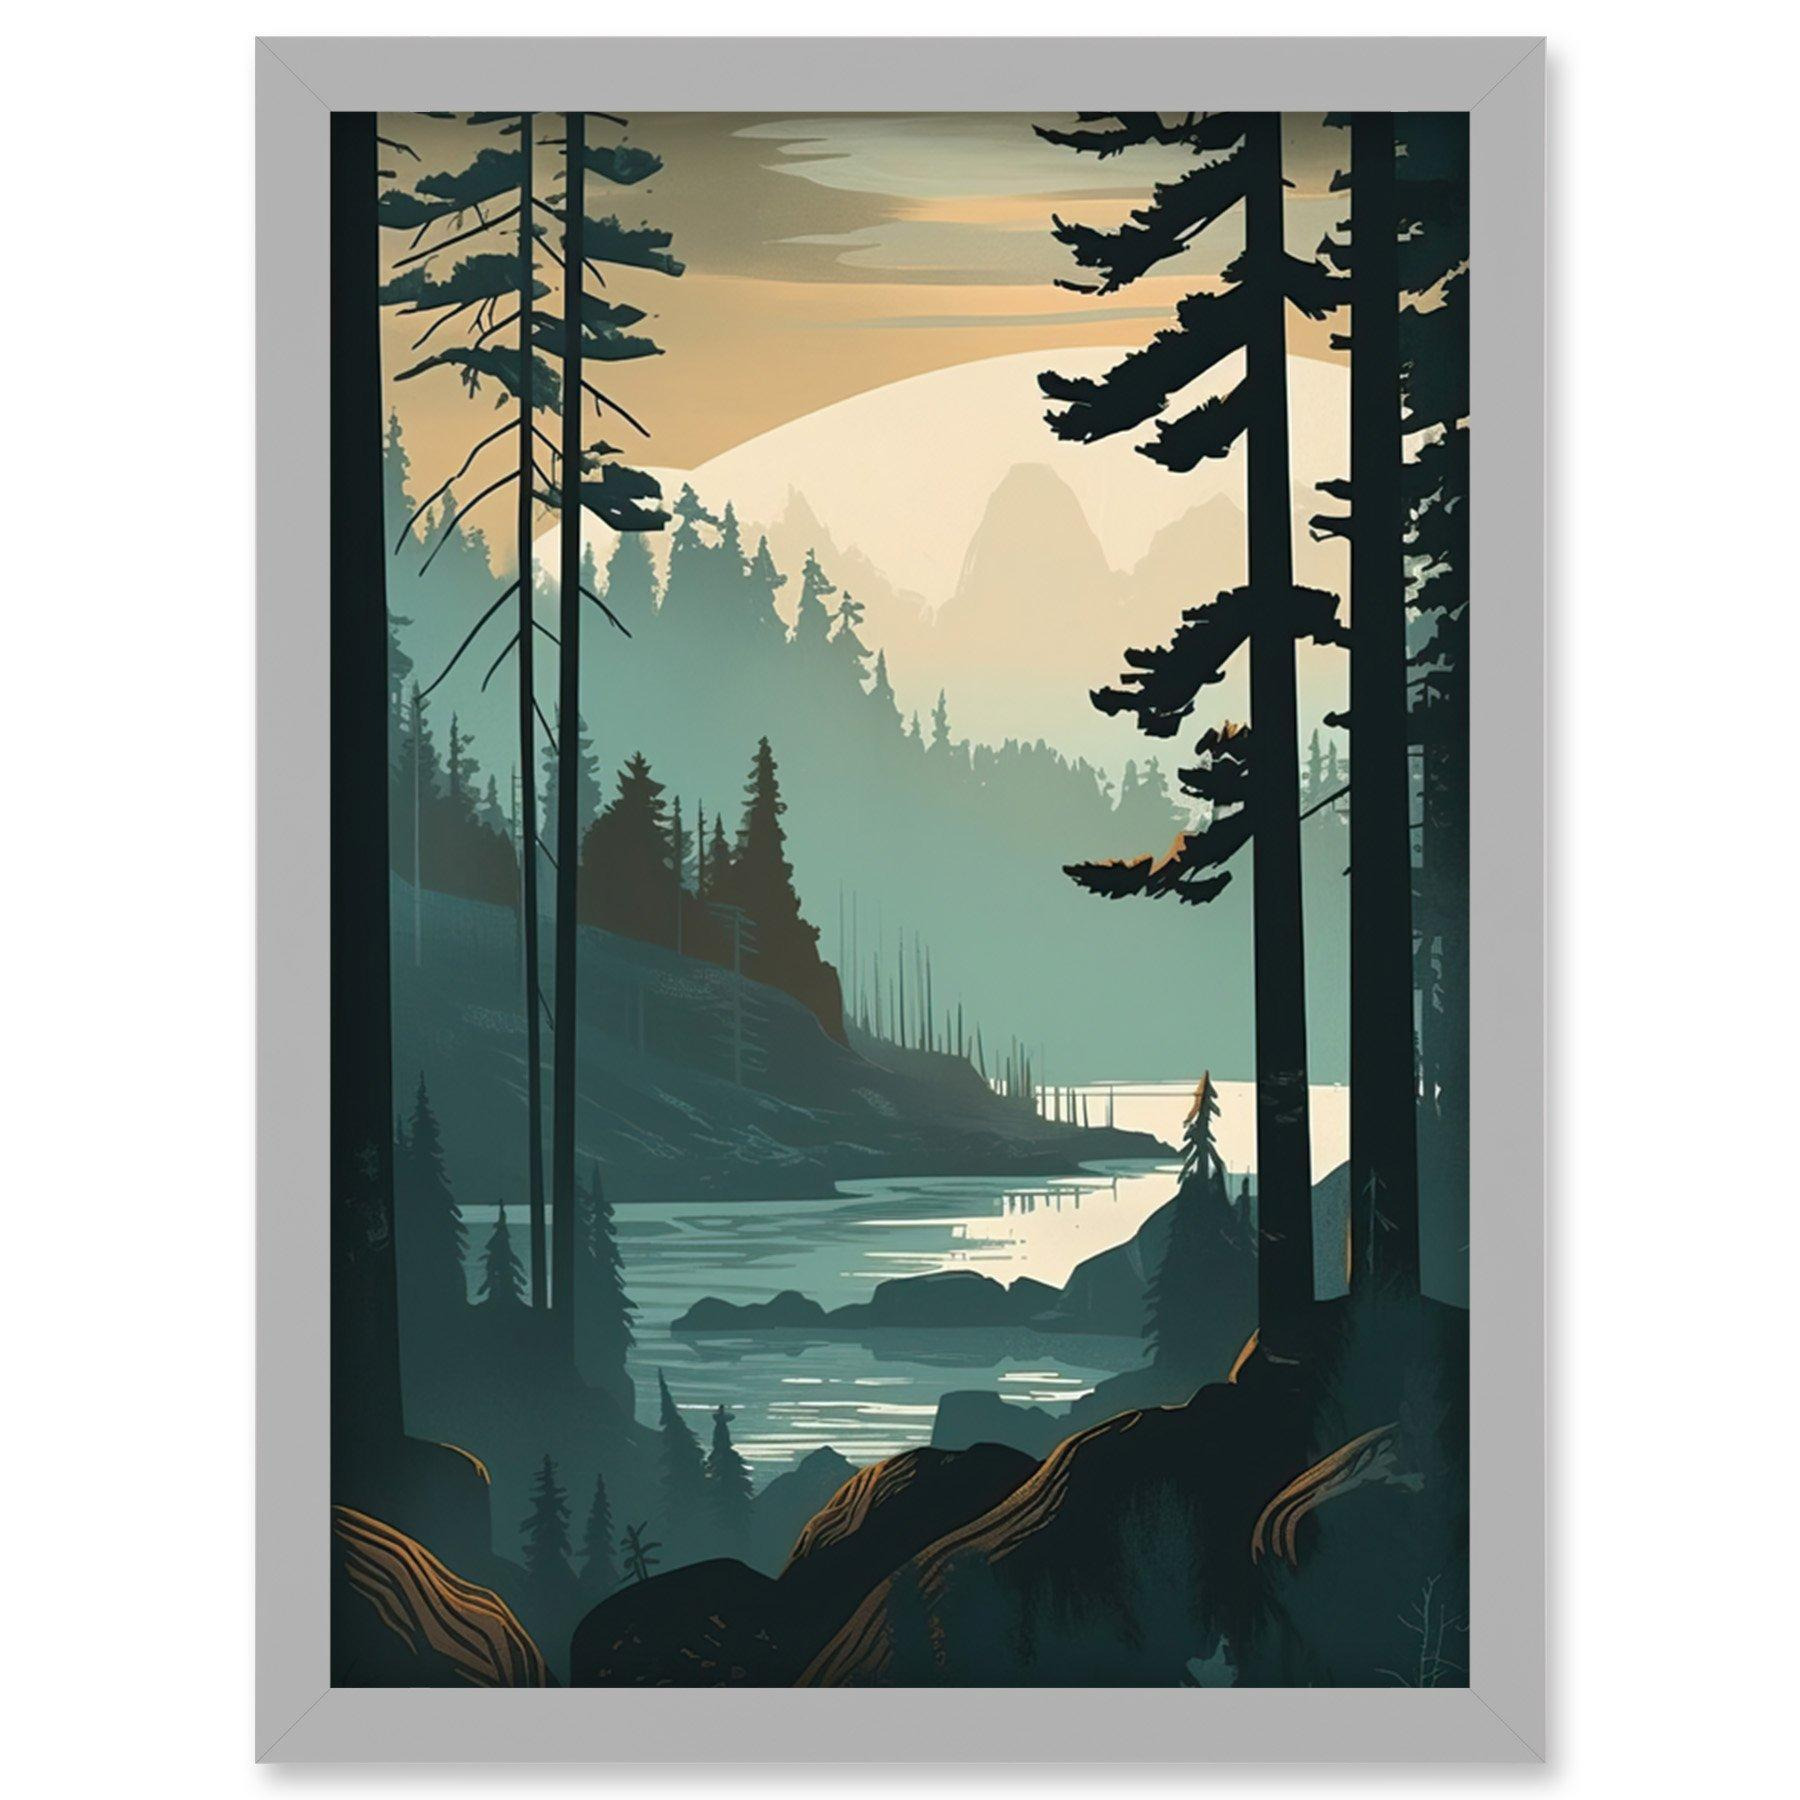 Great Bear Rainforest Misty Sunrise Landscape Artwork Framed Wall Art Print A4 - image 1